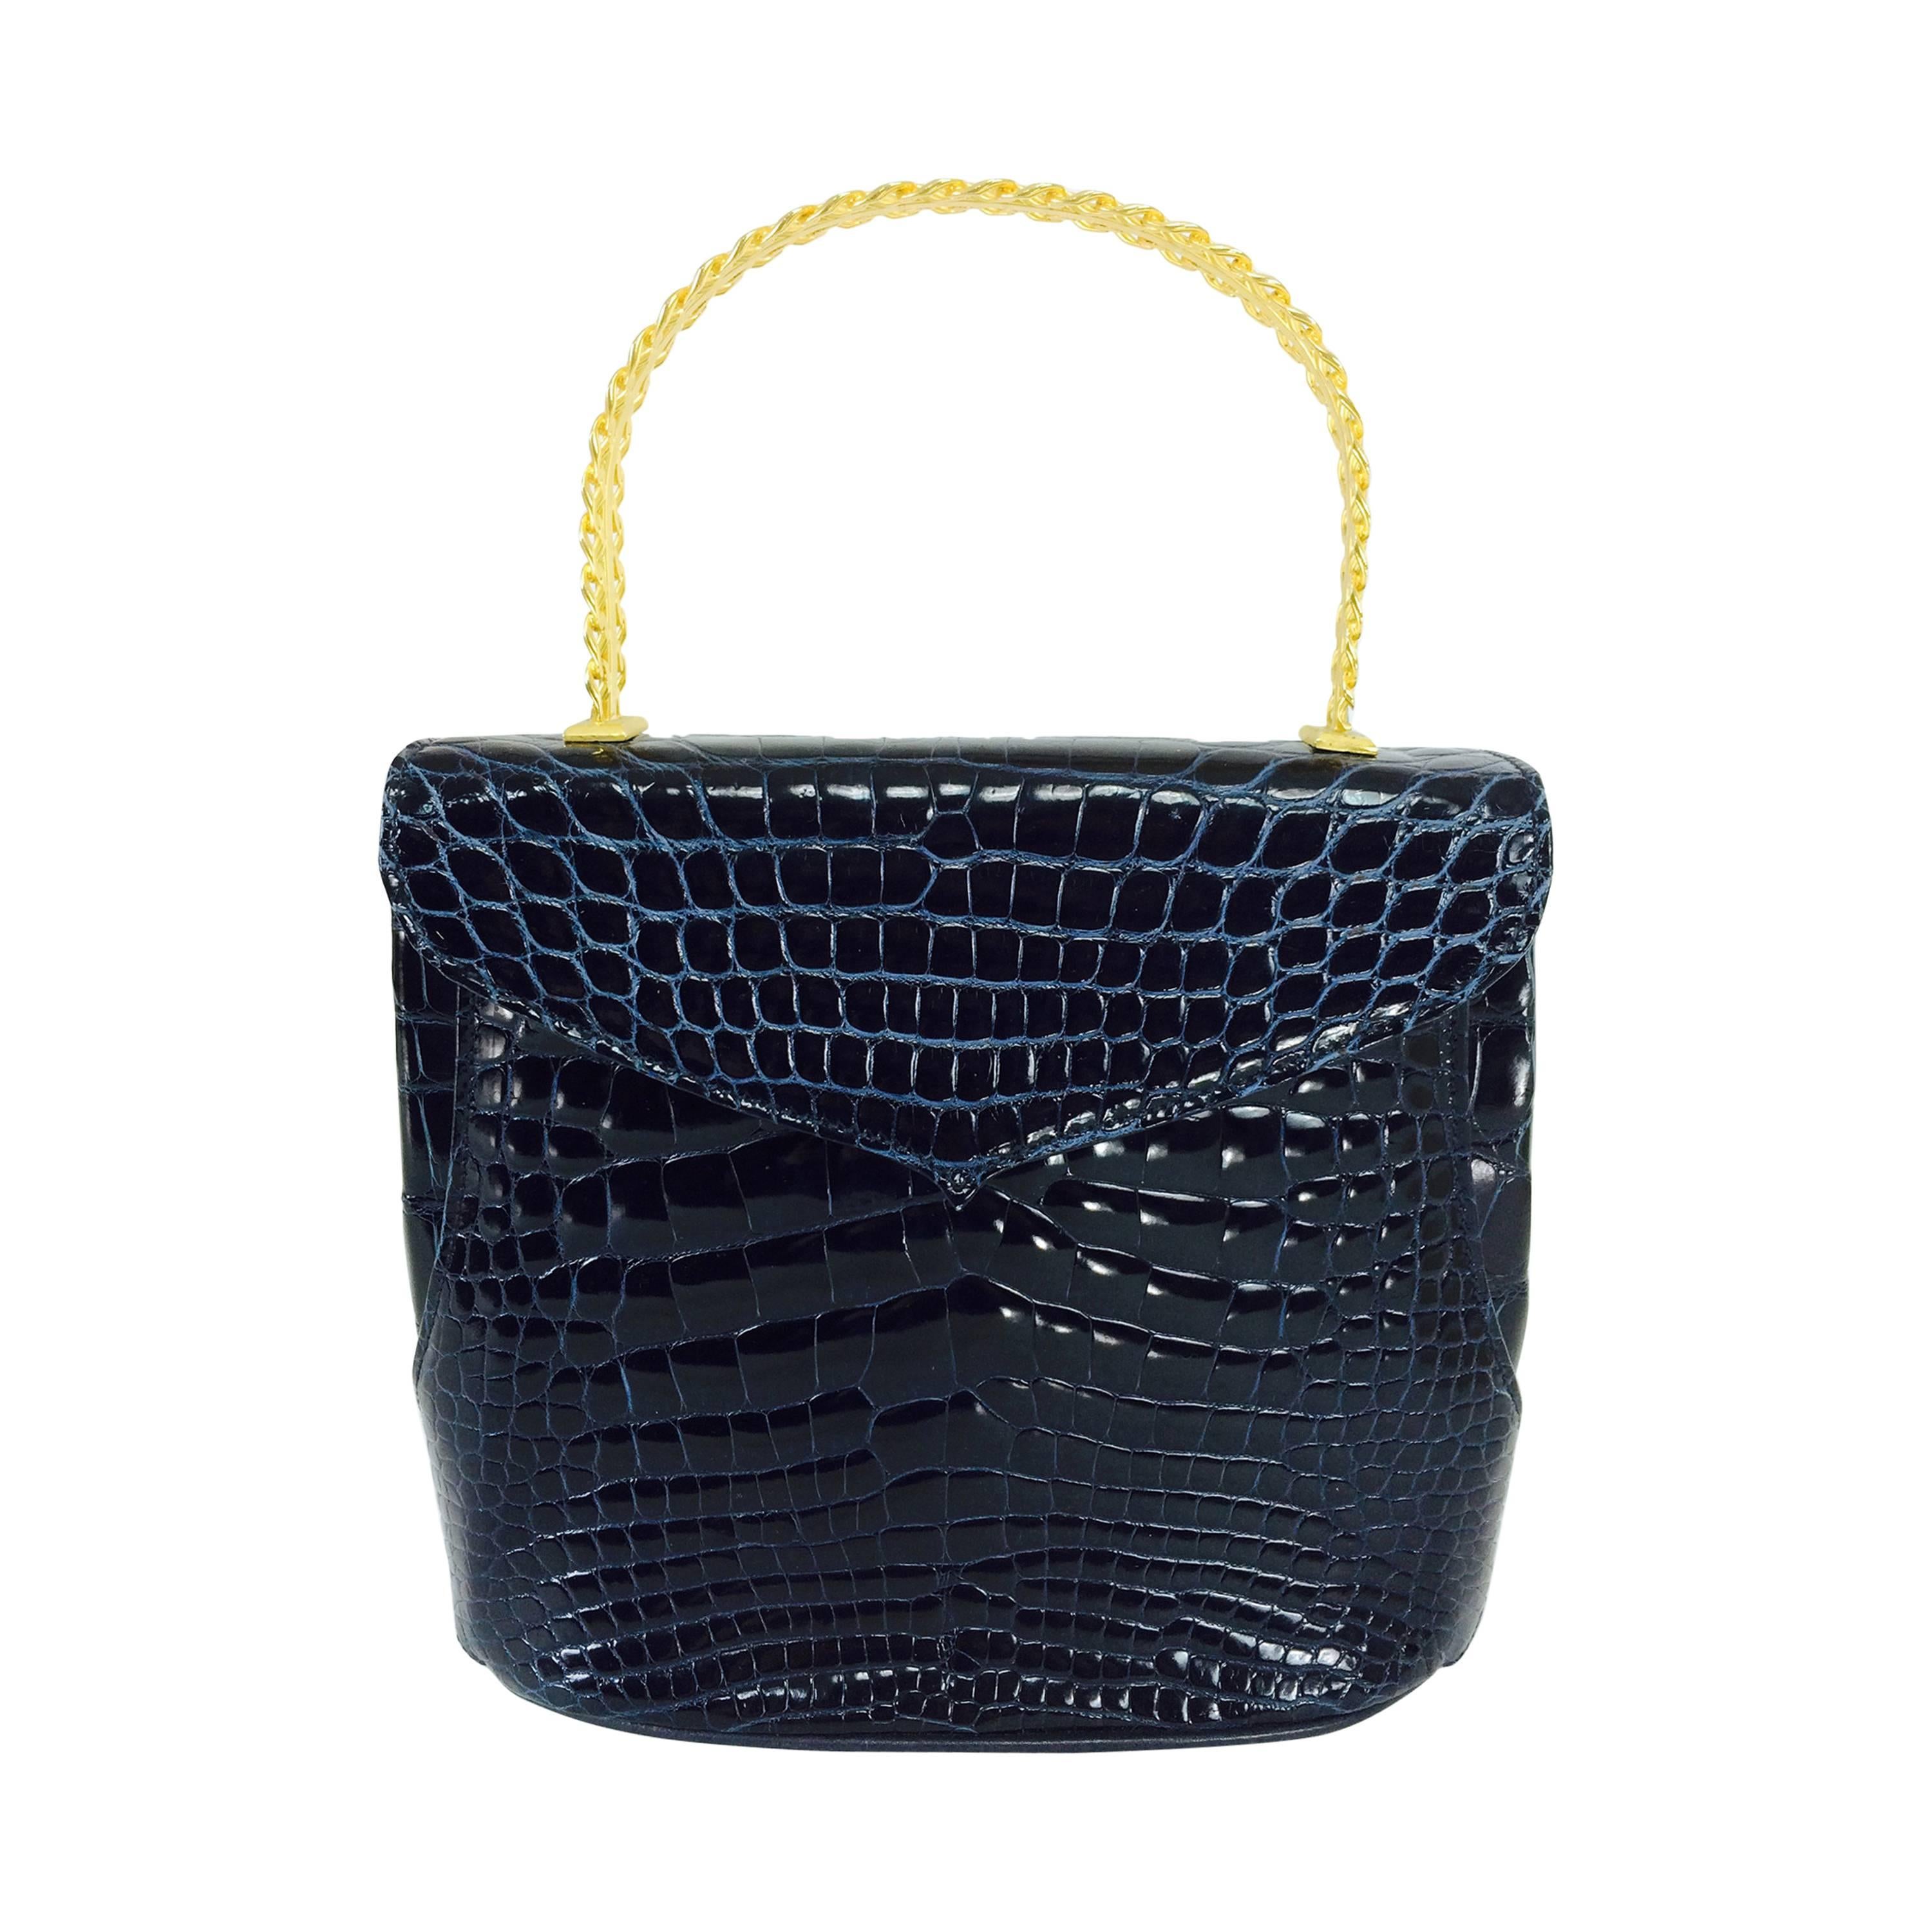 Lana Marks Lana of London navy blue glazed alligator handbag 1980s